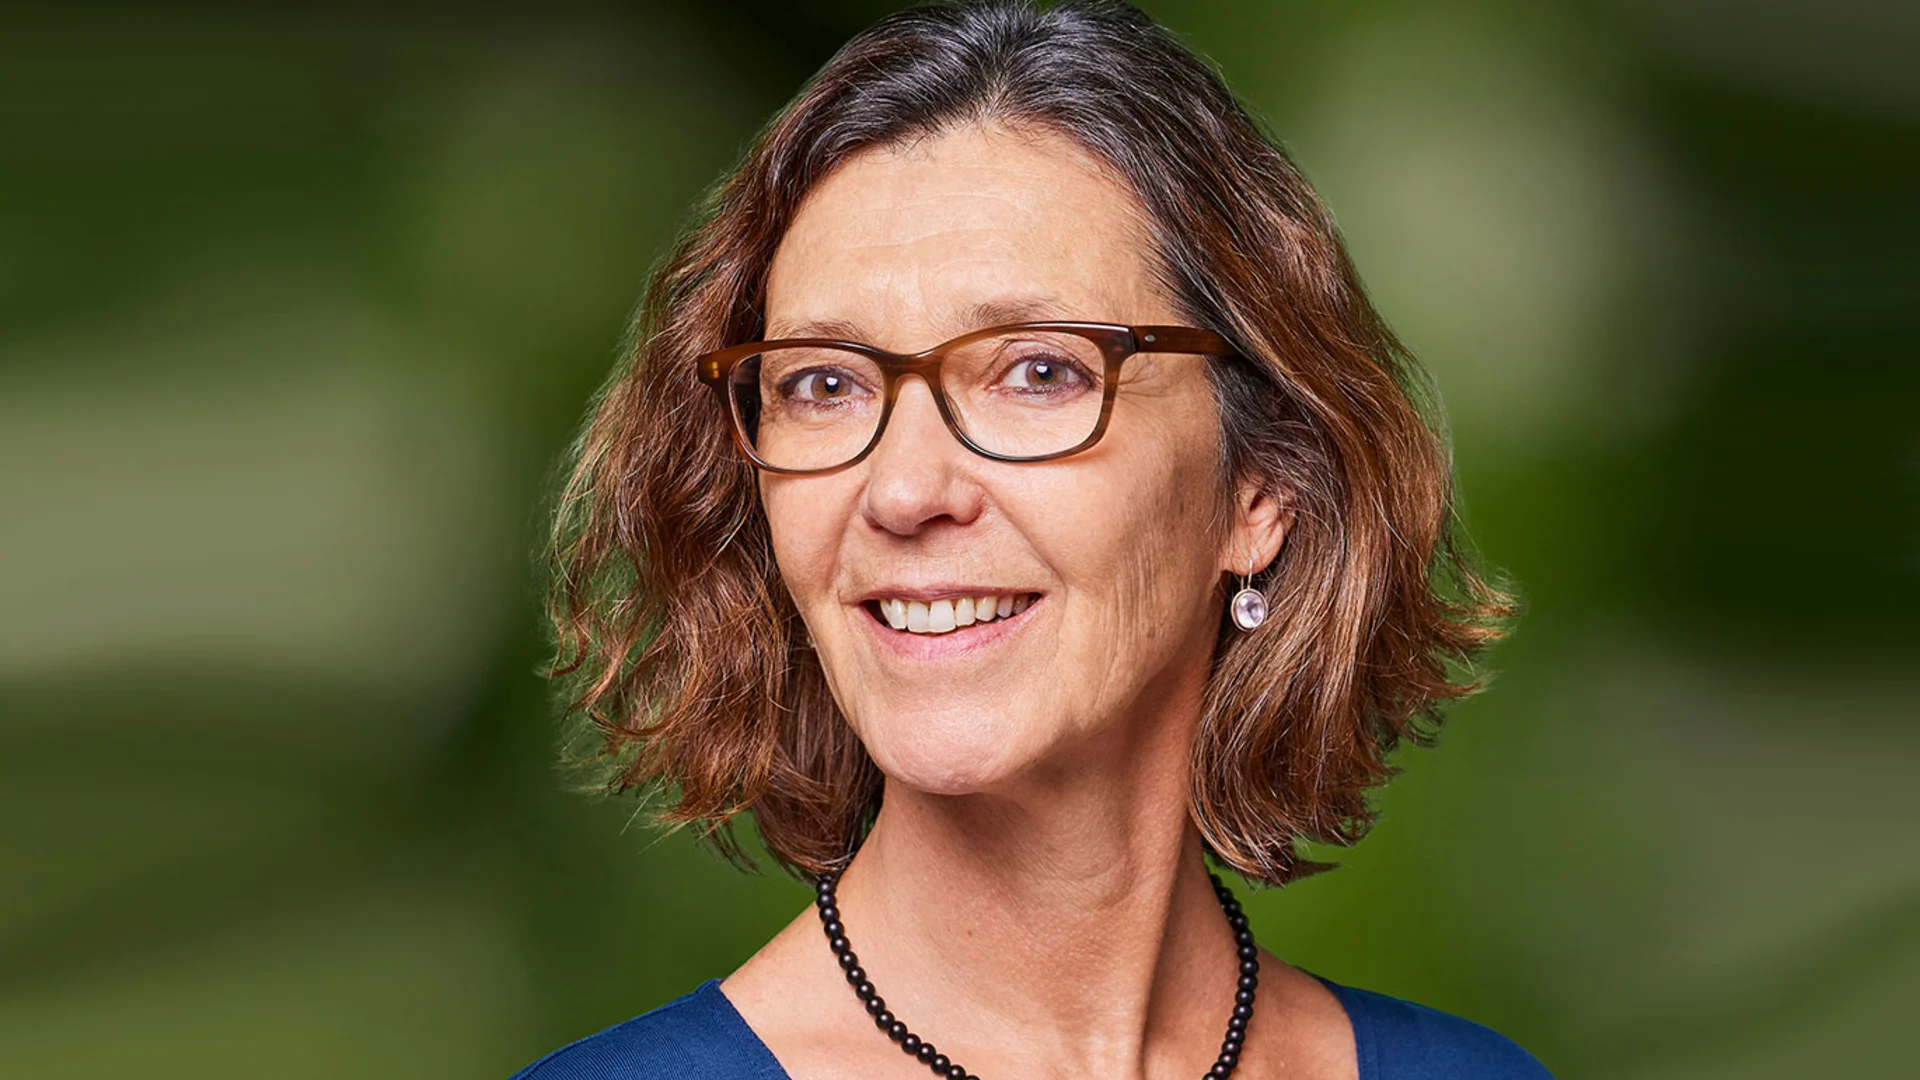 Eva Wyss, agriculture expert for WWF Switzerland.